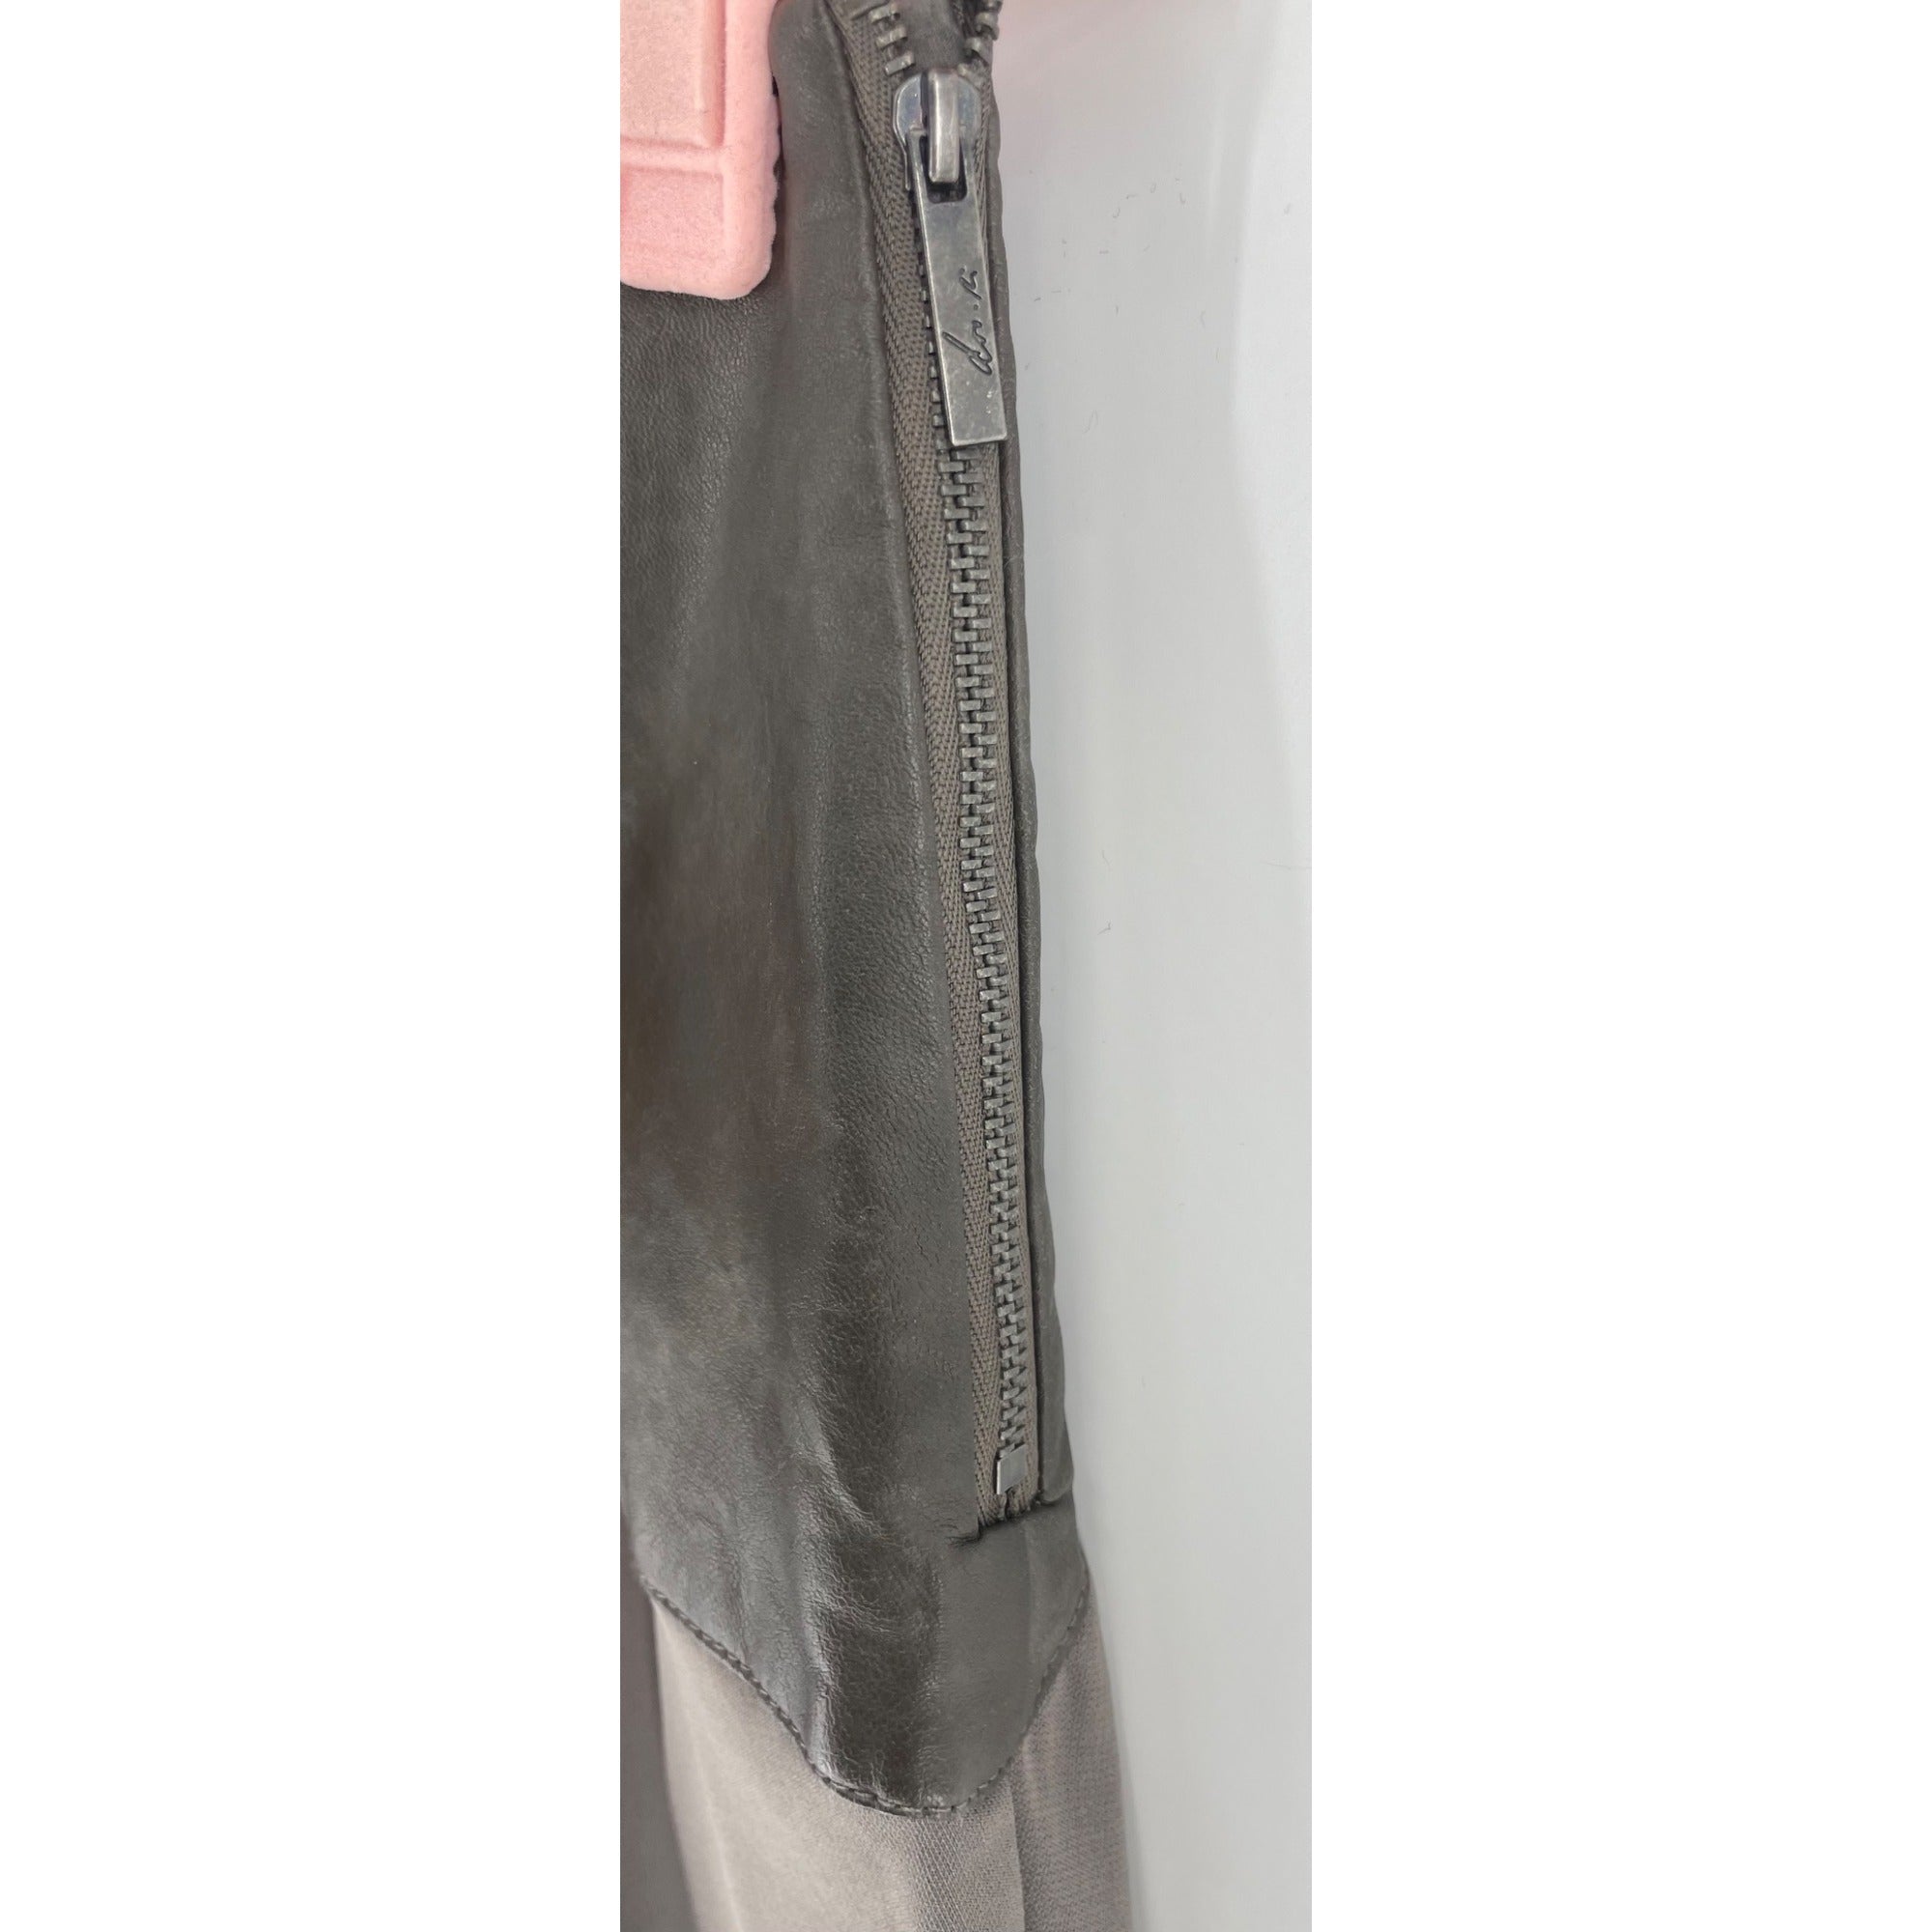 NWT Doo Ri Women’s Size 2 Gray Skirt W/ Faux Leather Waist